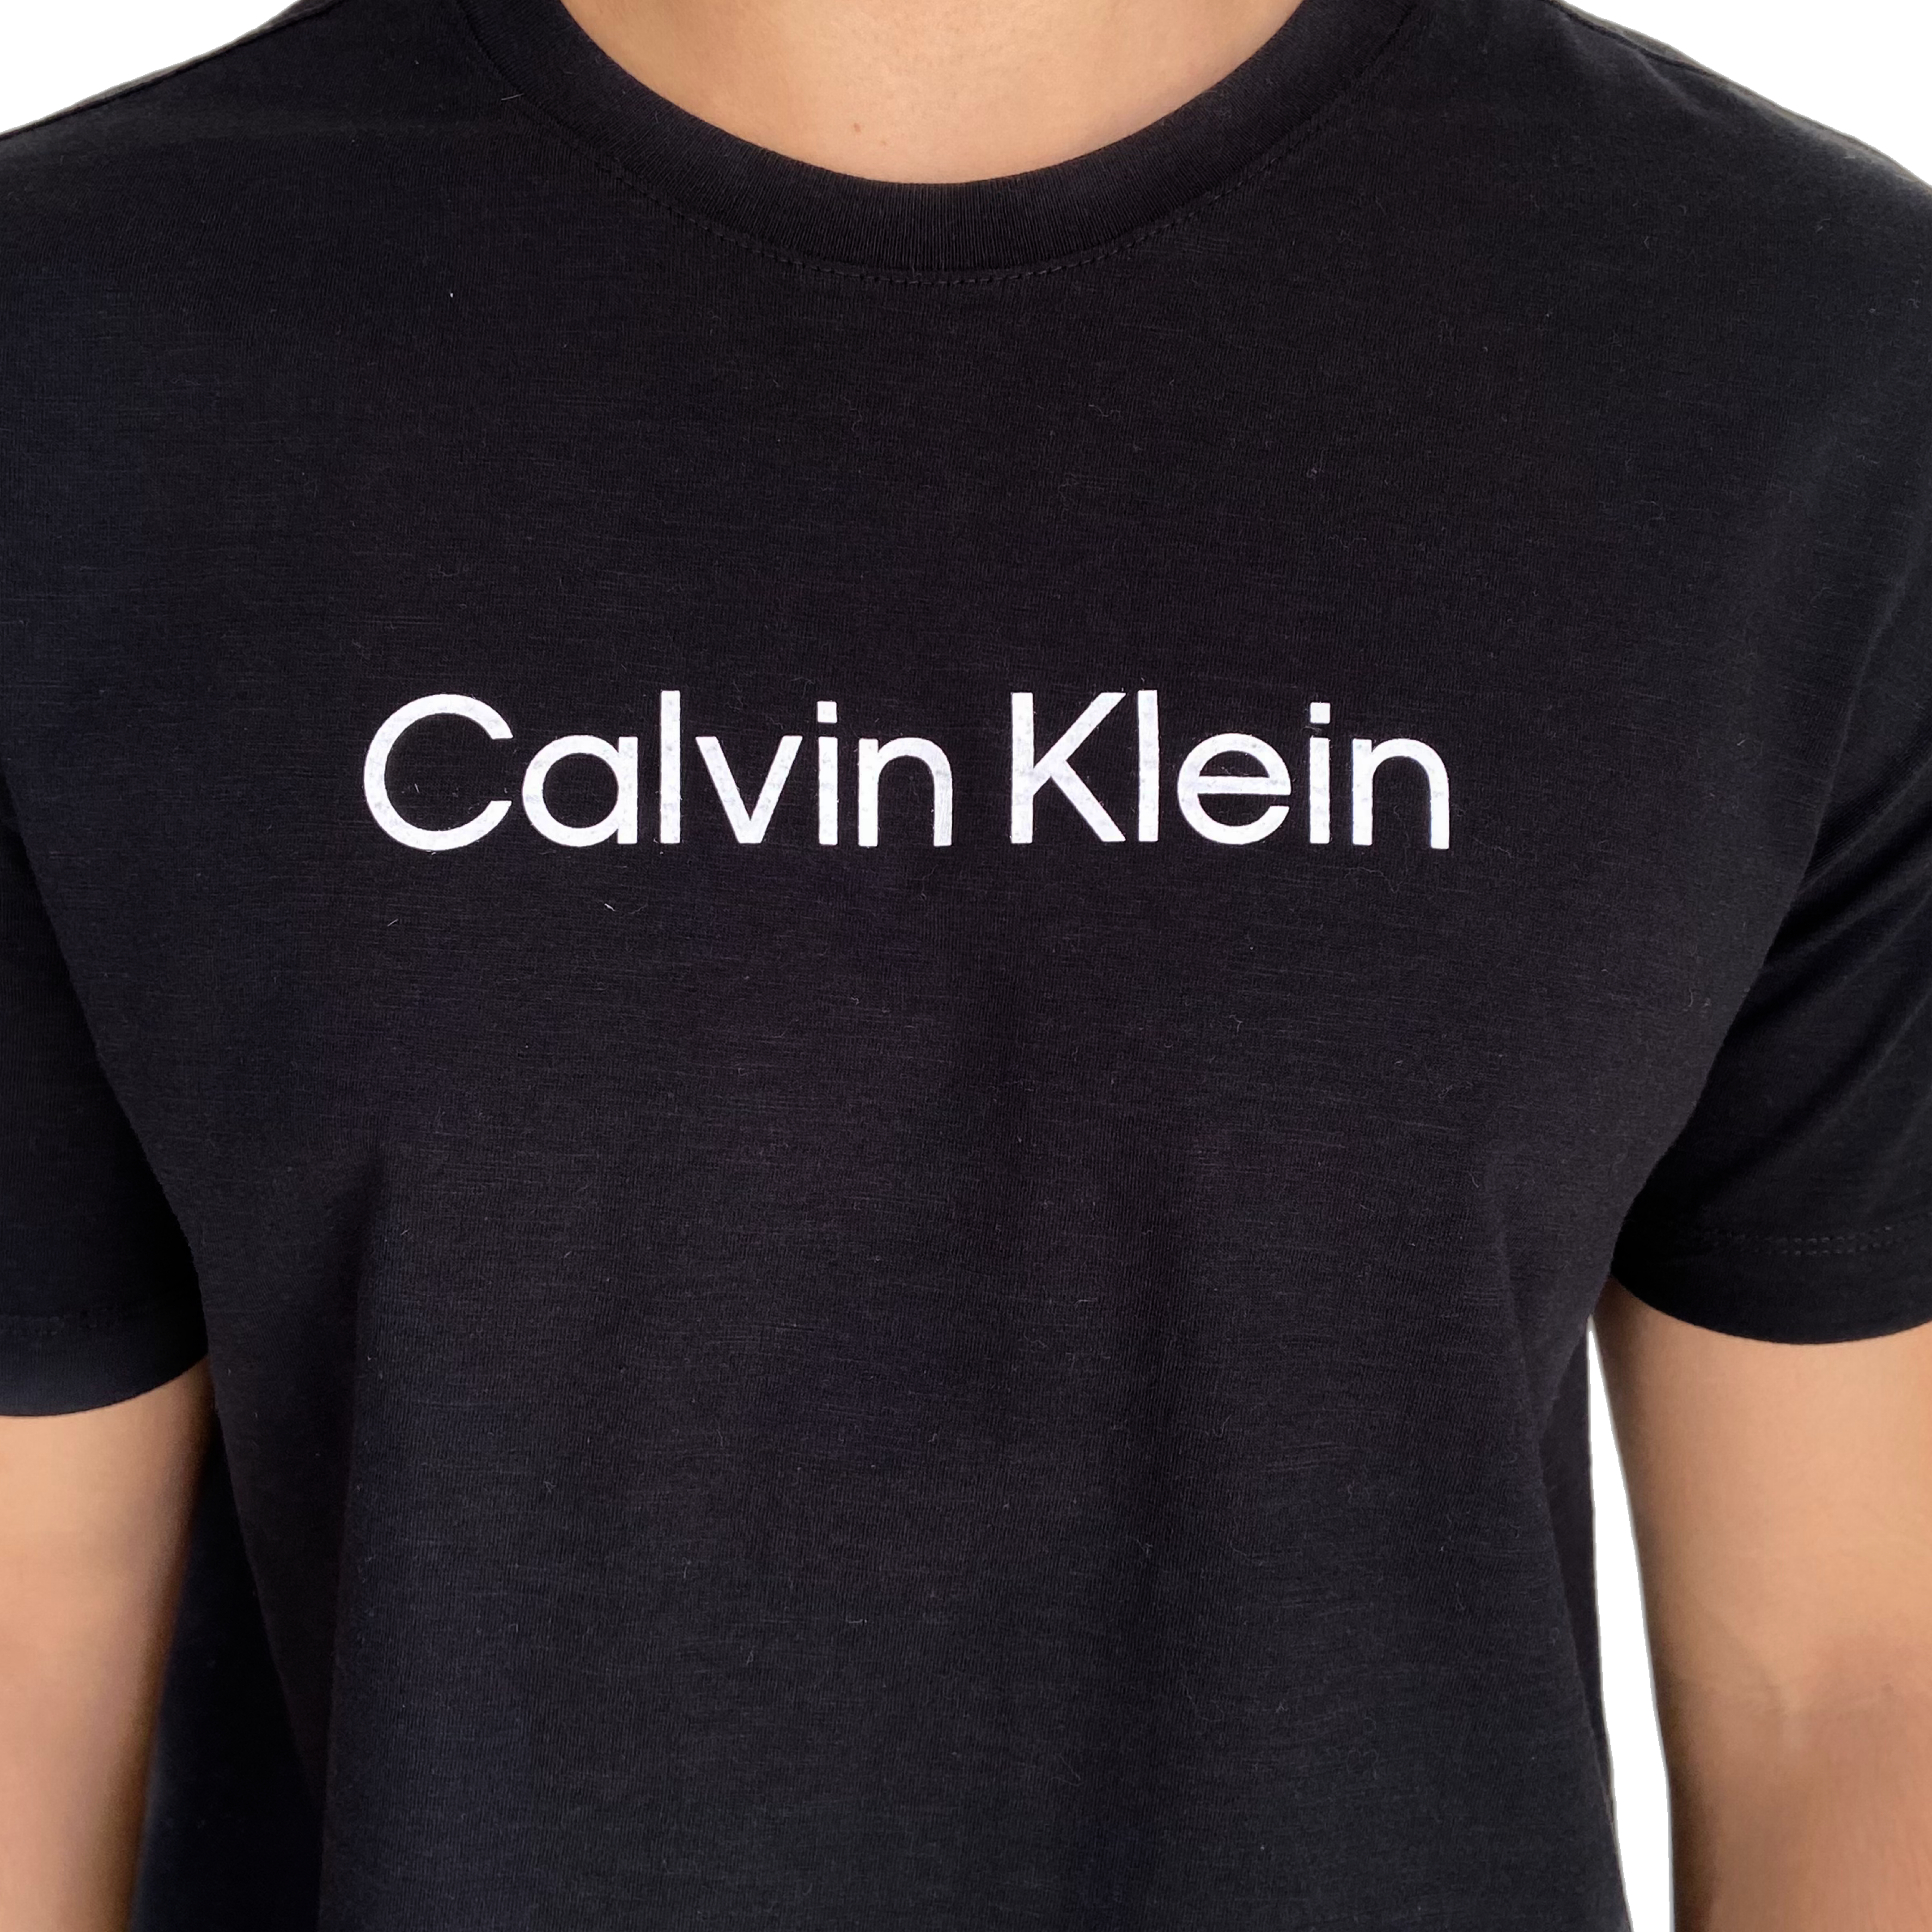 Camiseta de algodão Calvin klein marga curta estampada preta